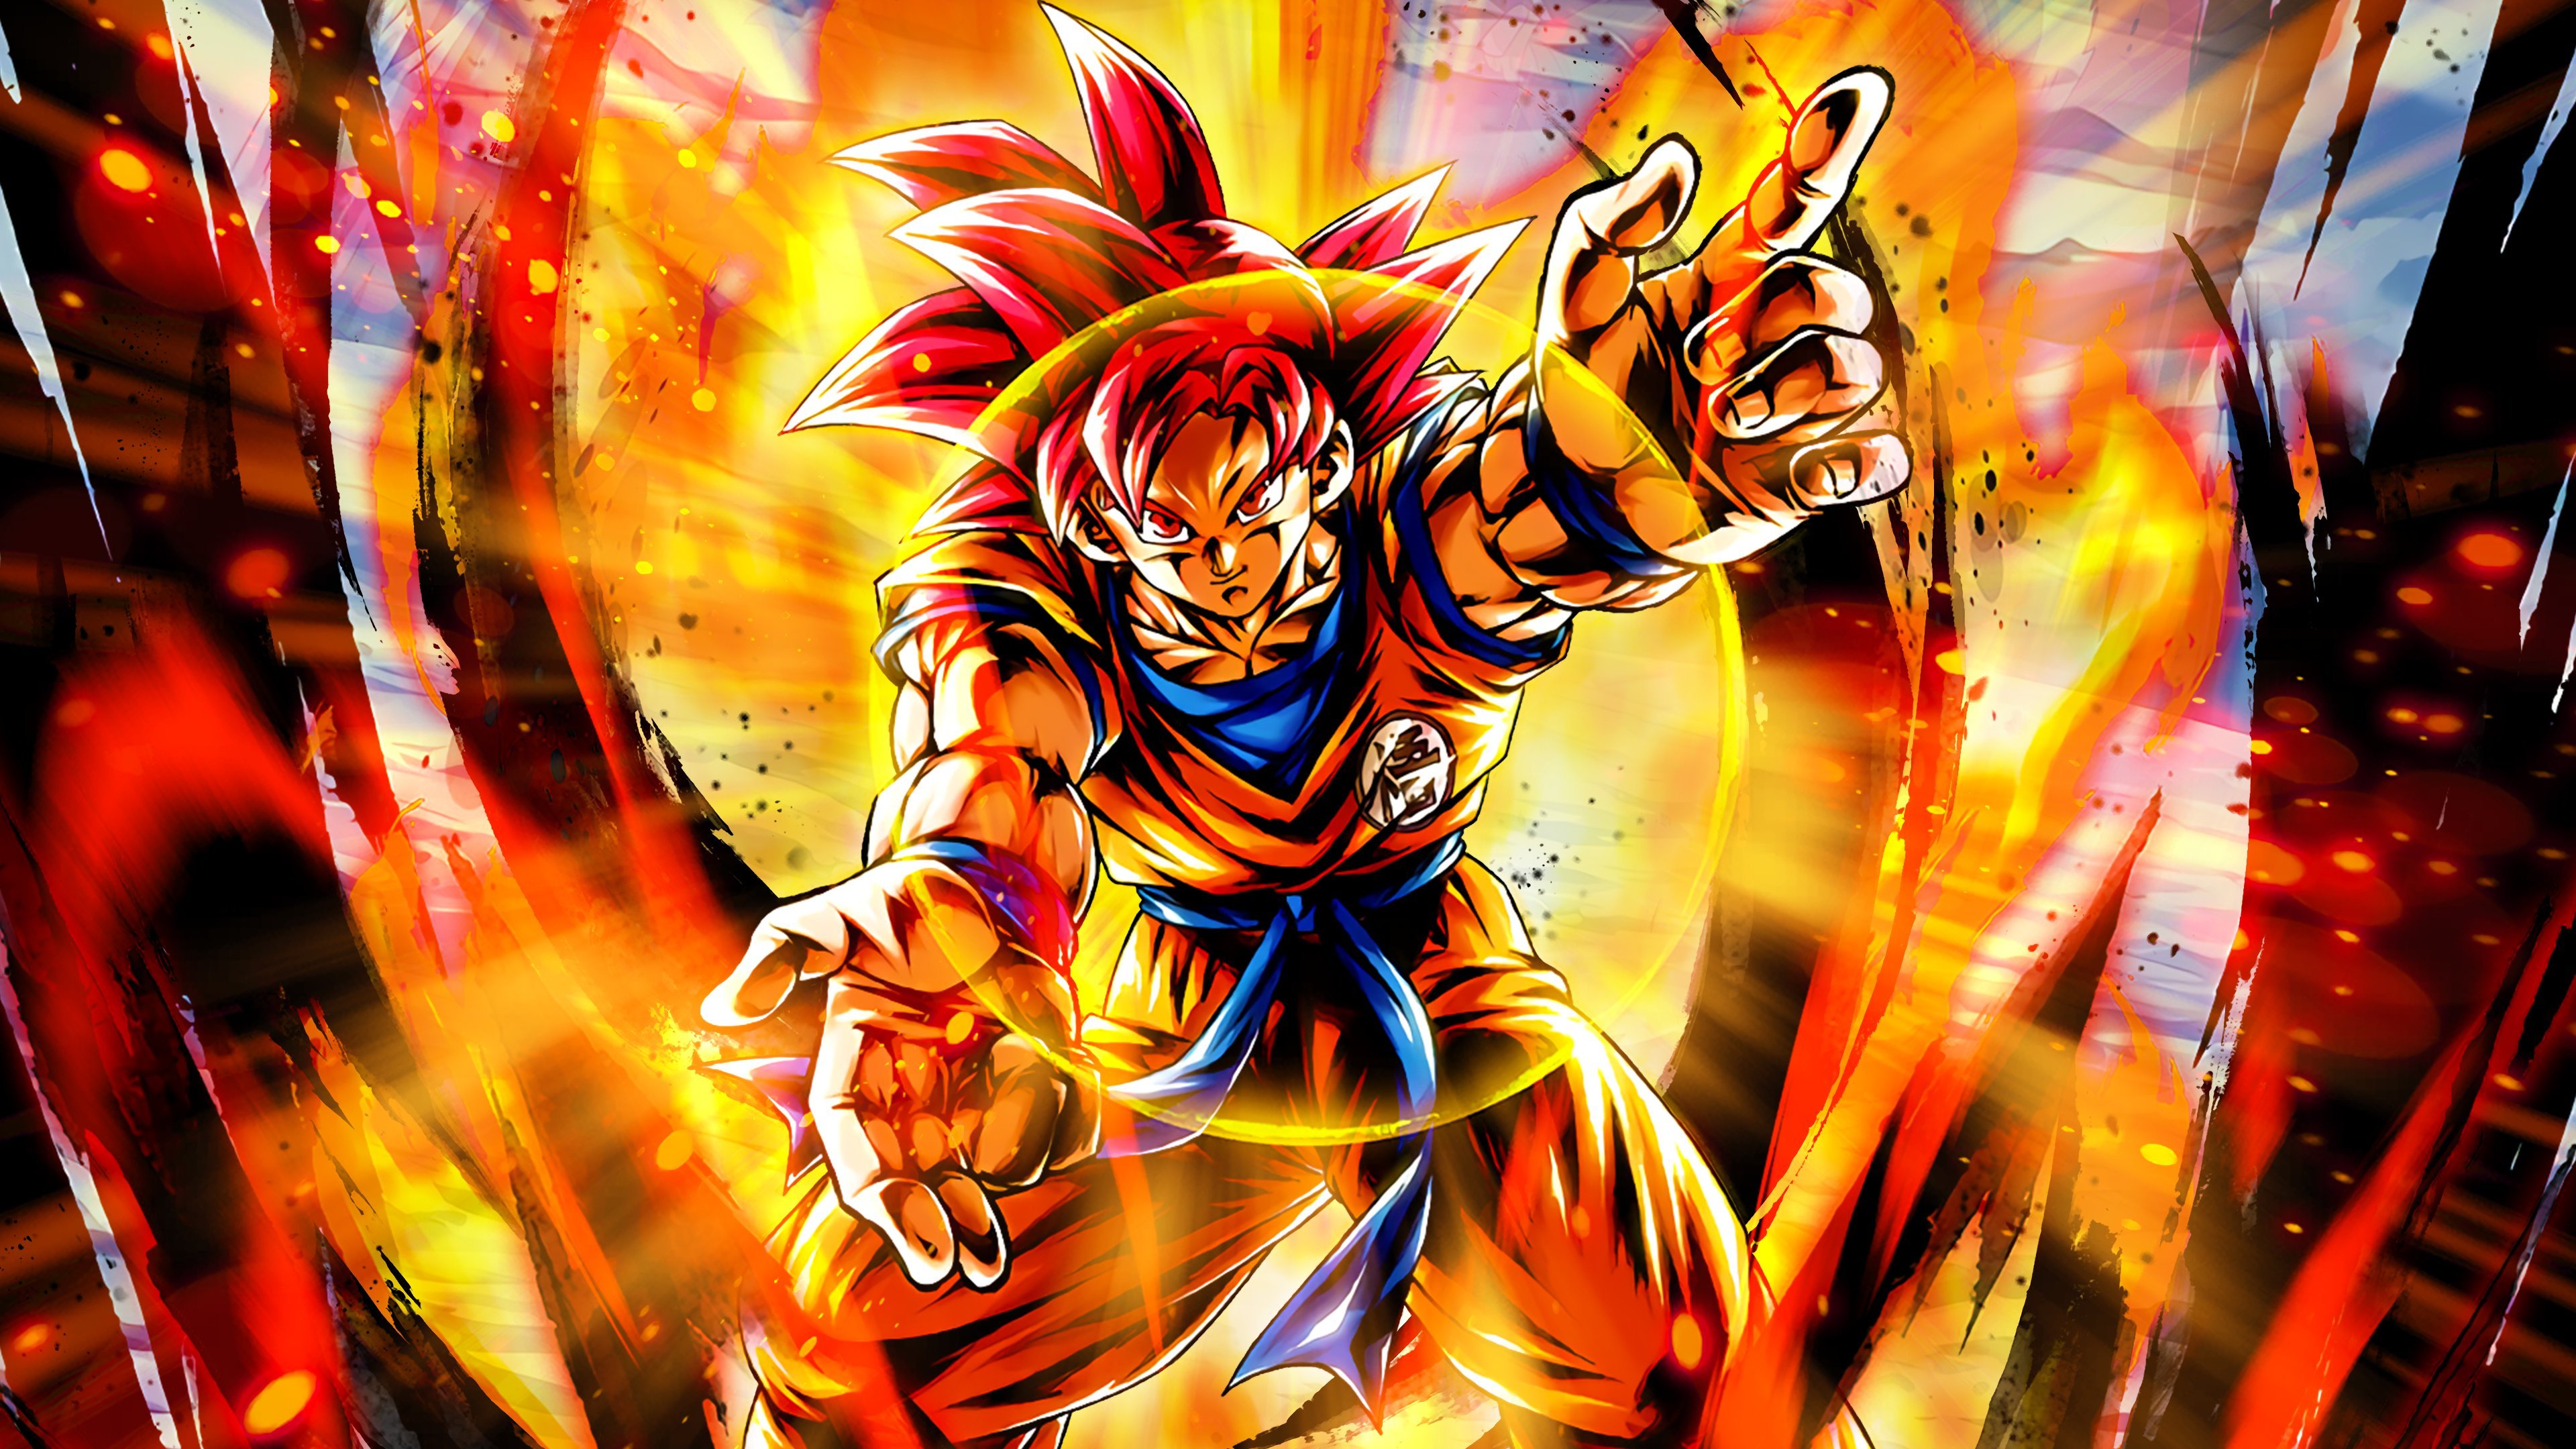 Hydros Super Saiyan God Goku v2 4K PC Wallpaper + 4k Phone Wallpaper! #DBLegends #DragonBallLegends